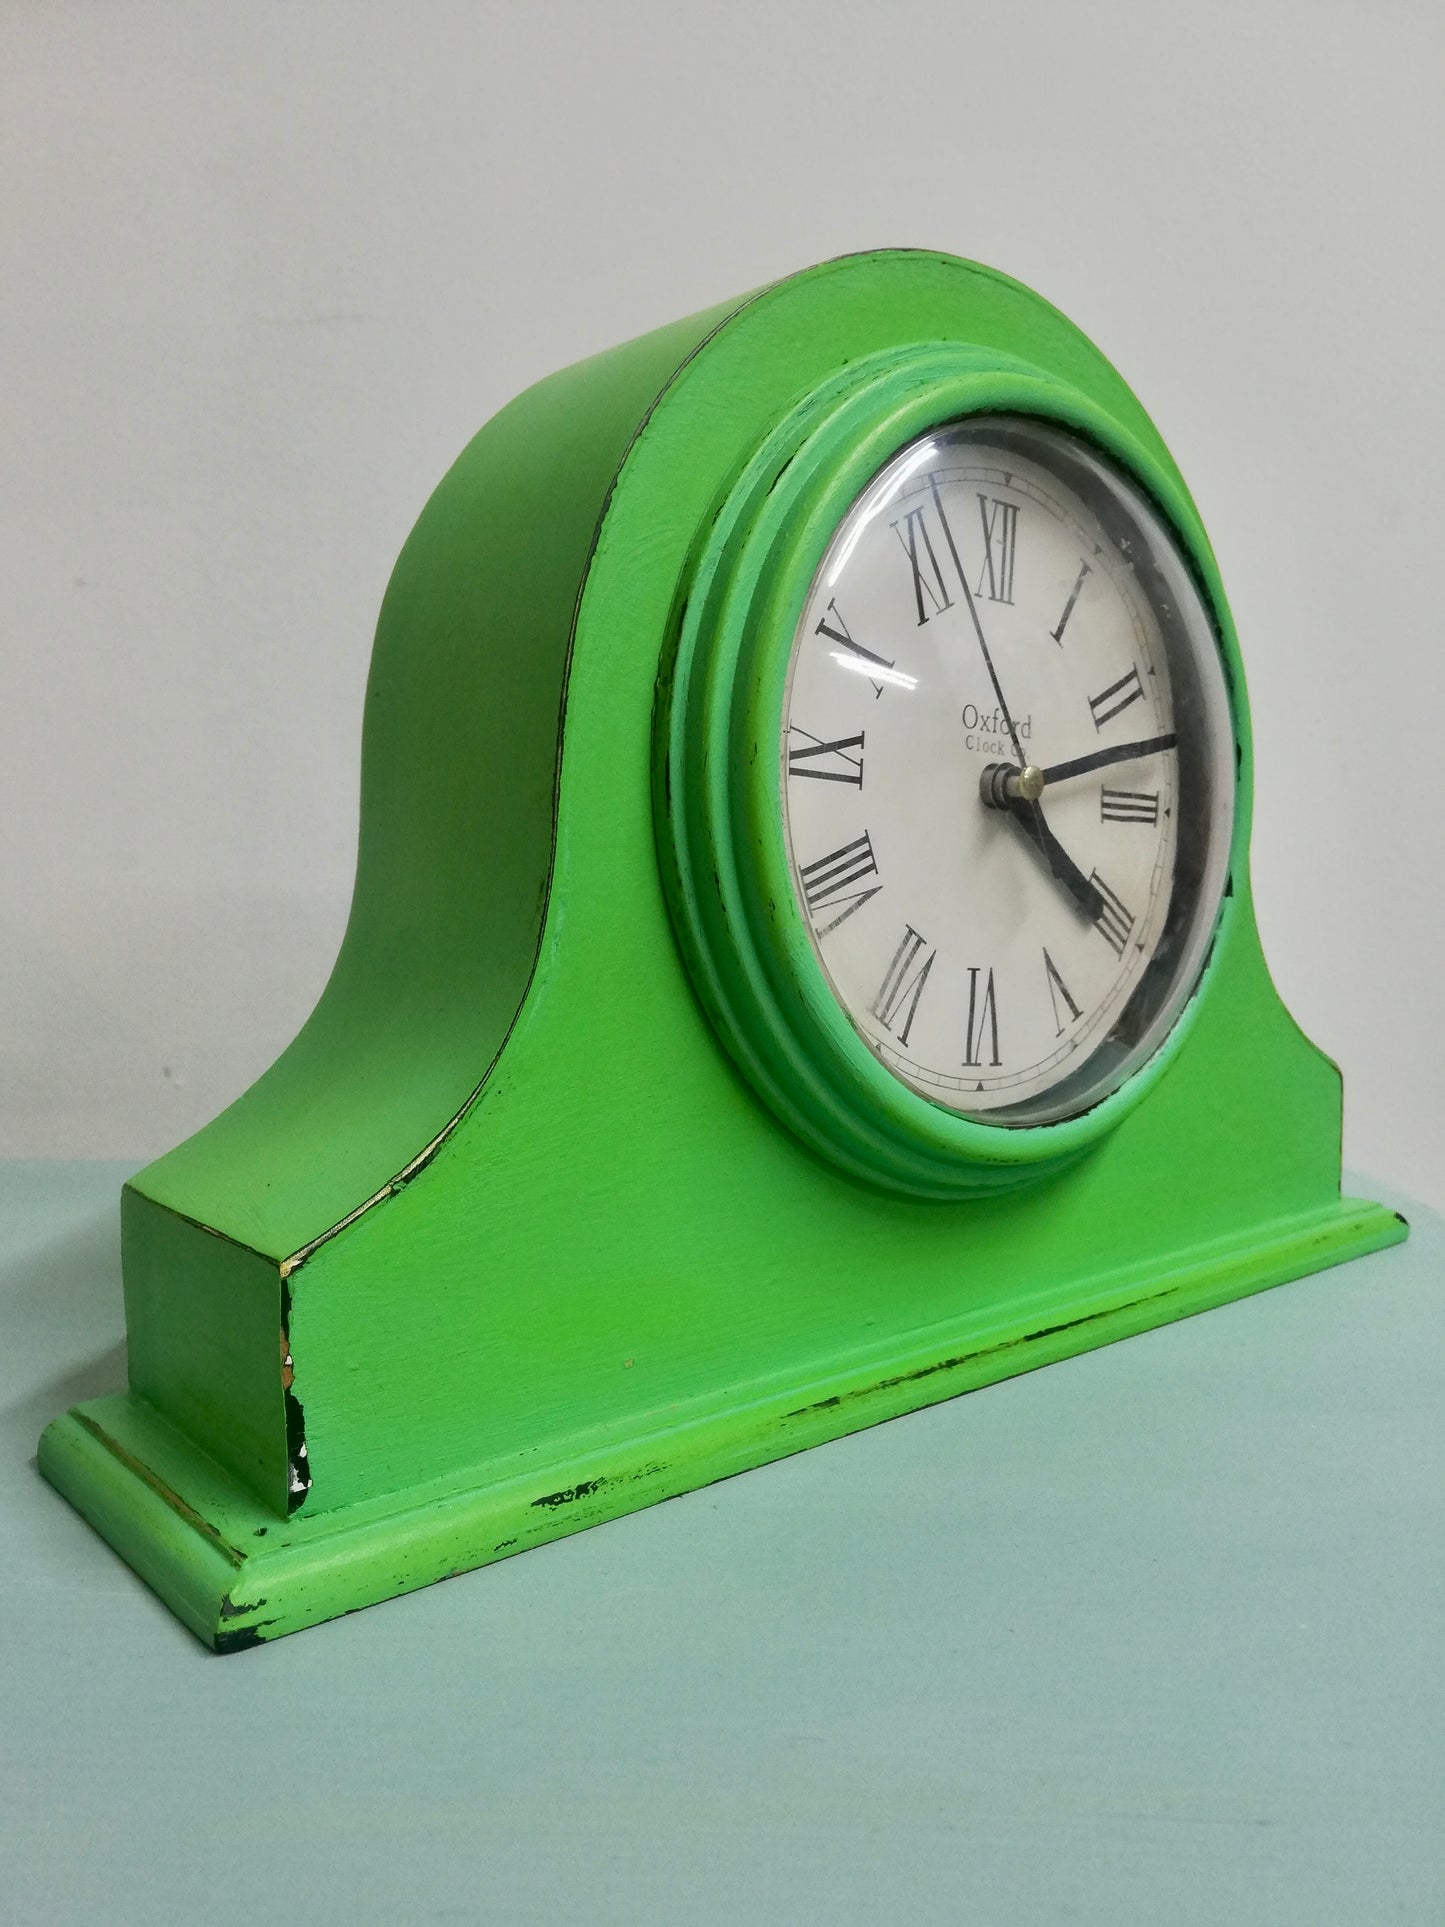 Revamped mantlepiece clock in zesty Green